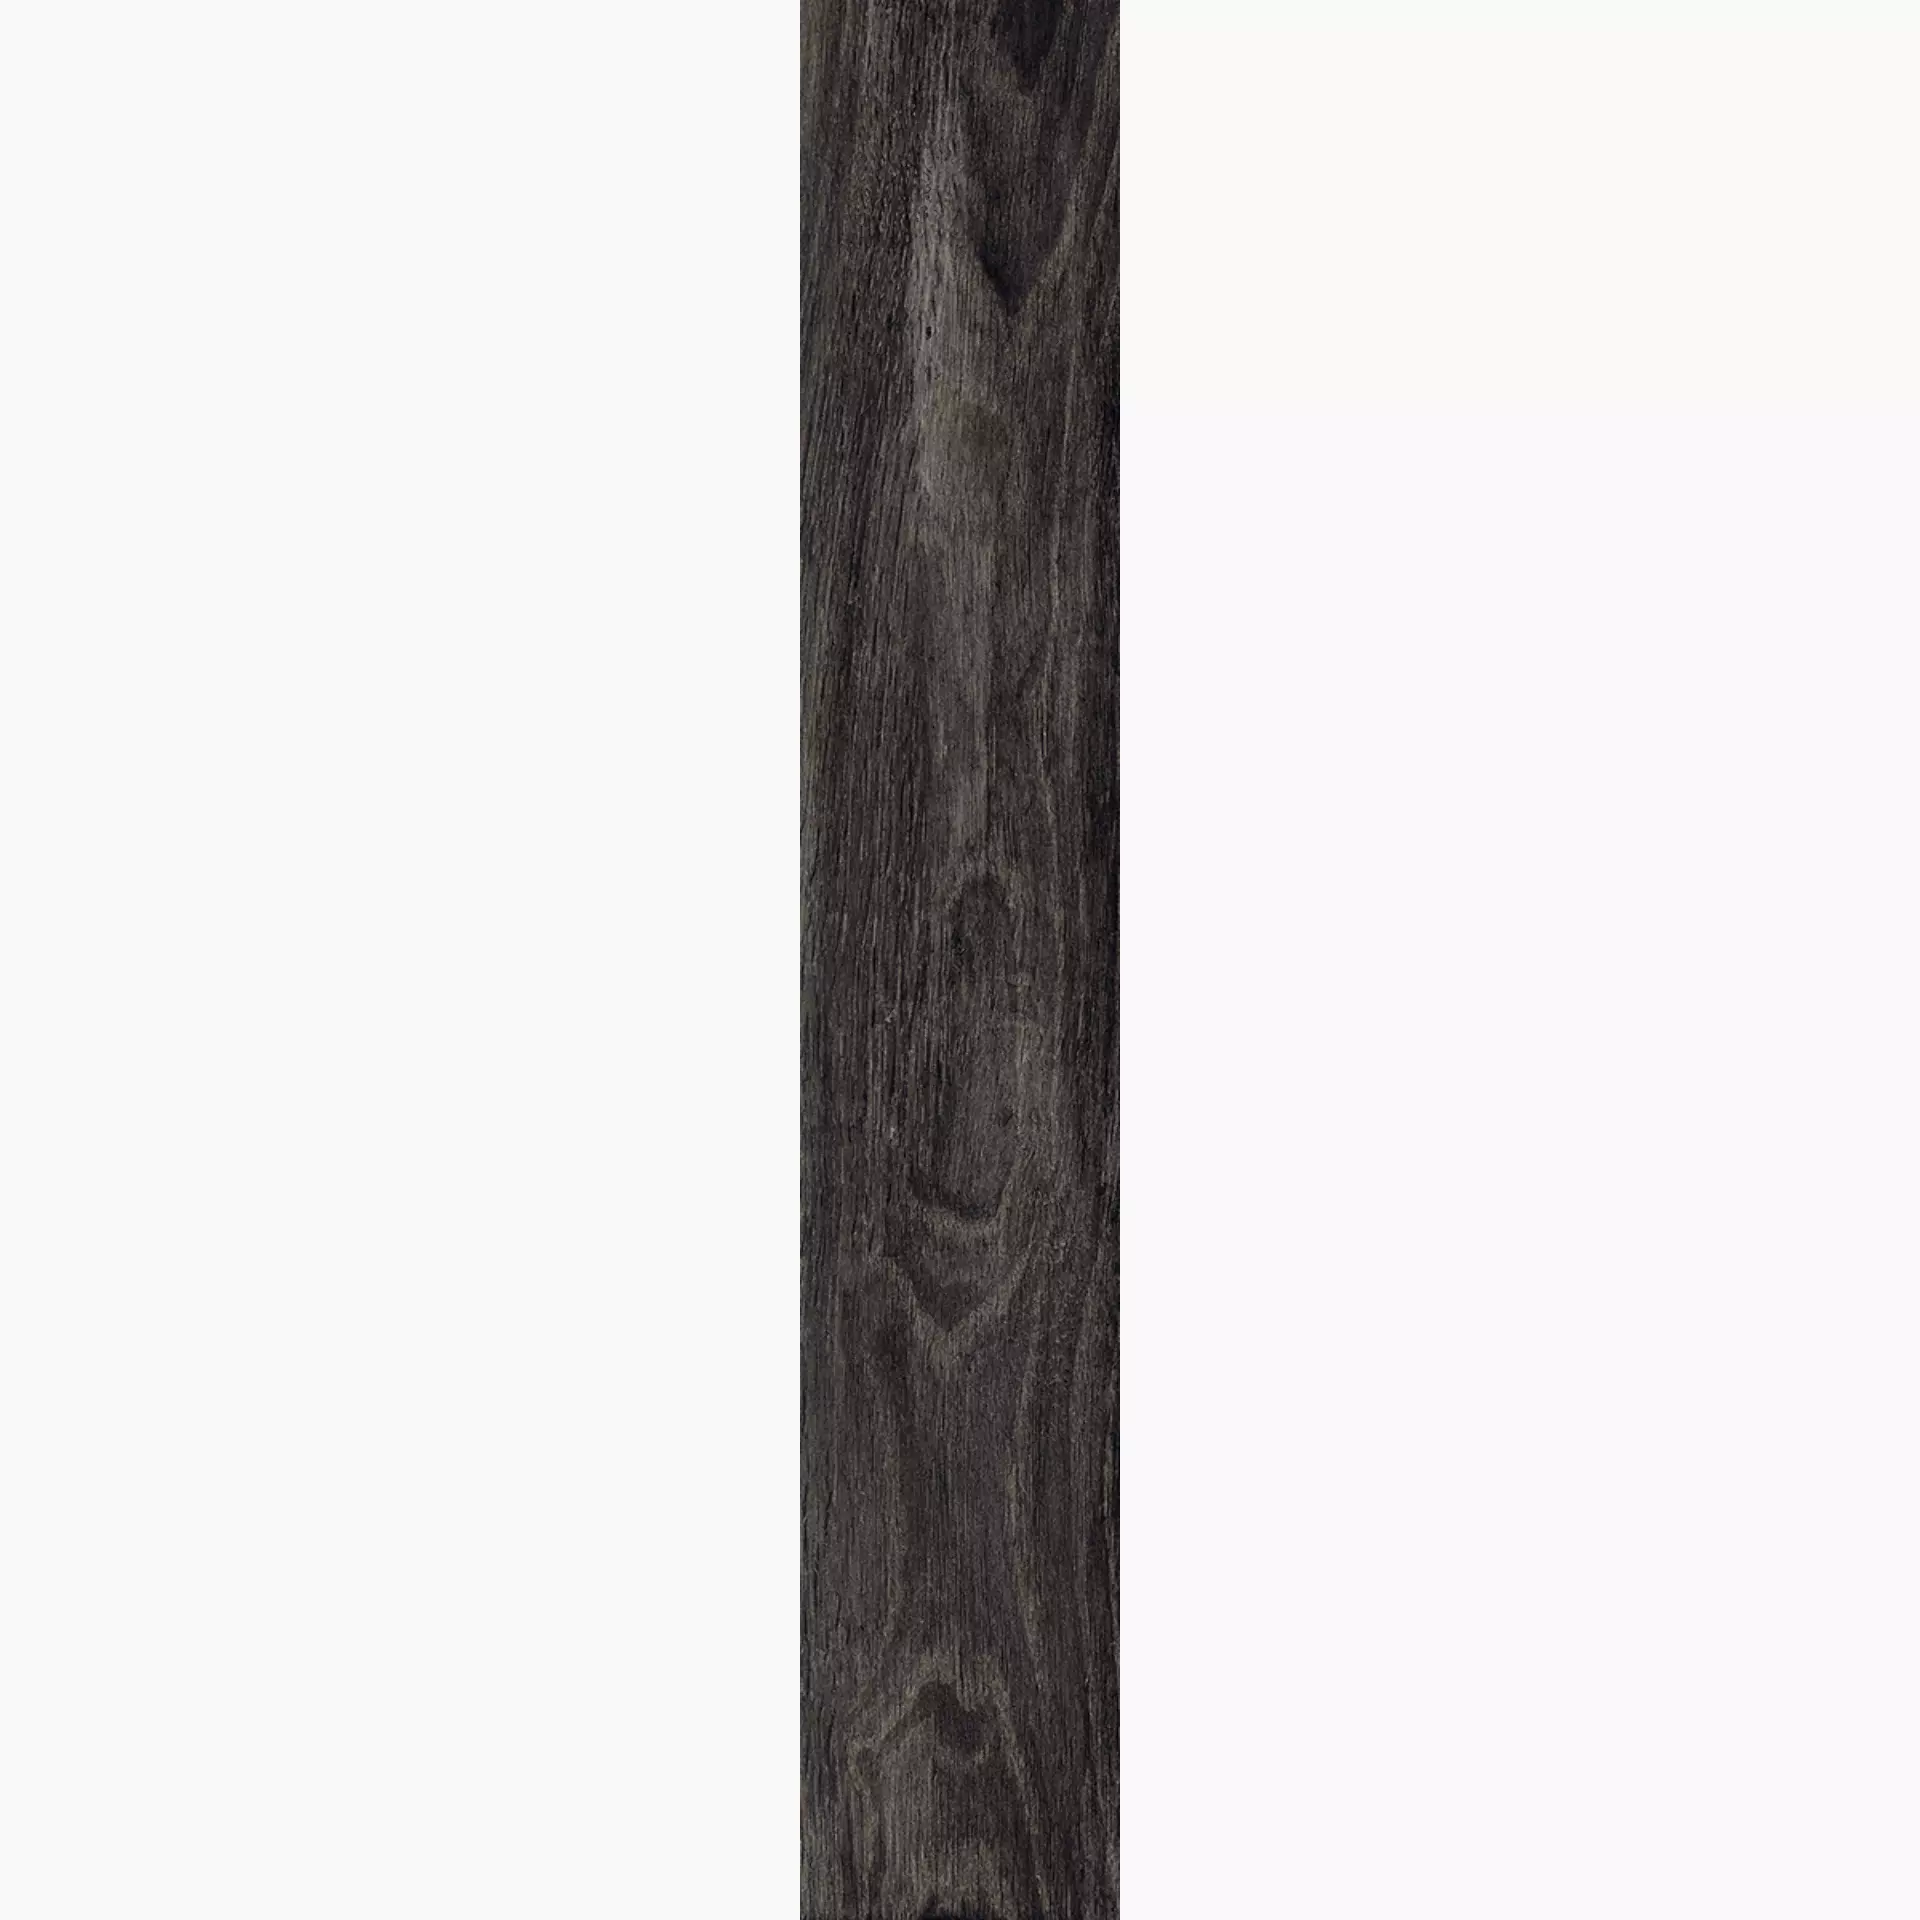 Rondine Greenwood Nero Naturale J86334 7,5x45cm 8,5mm